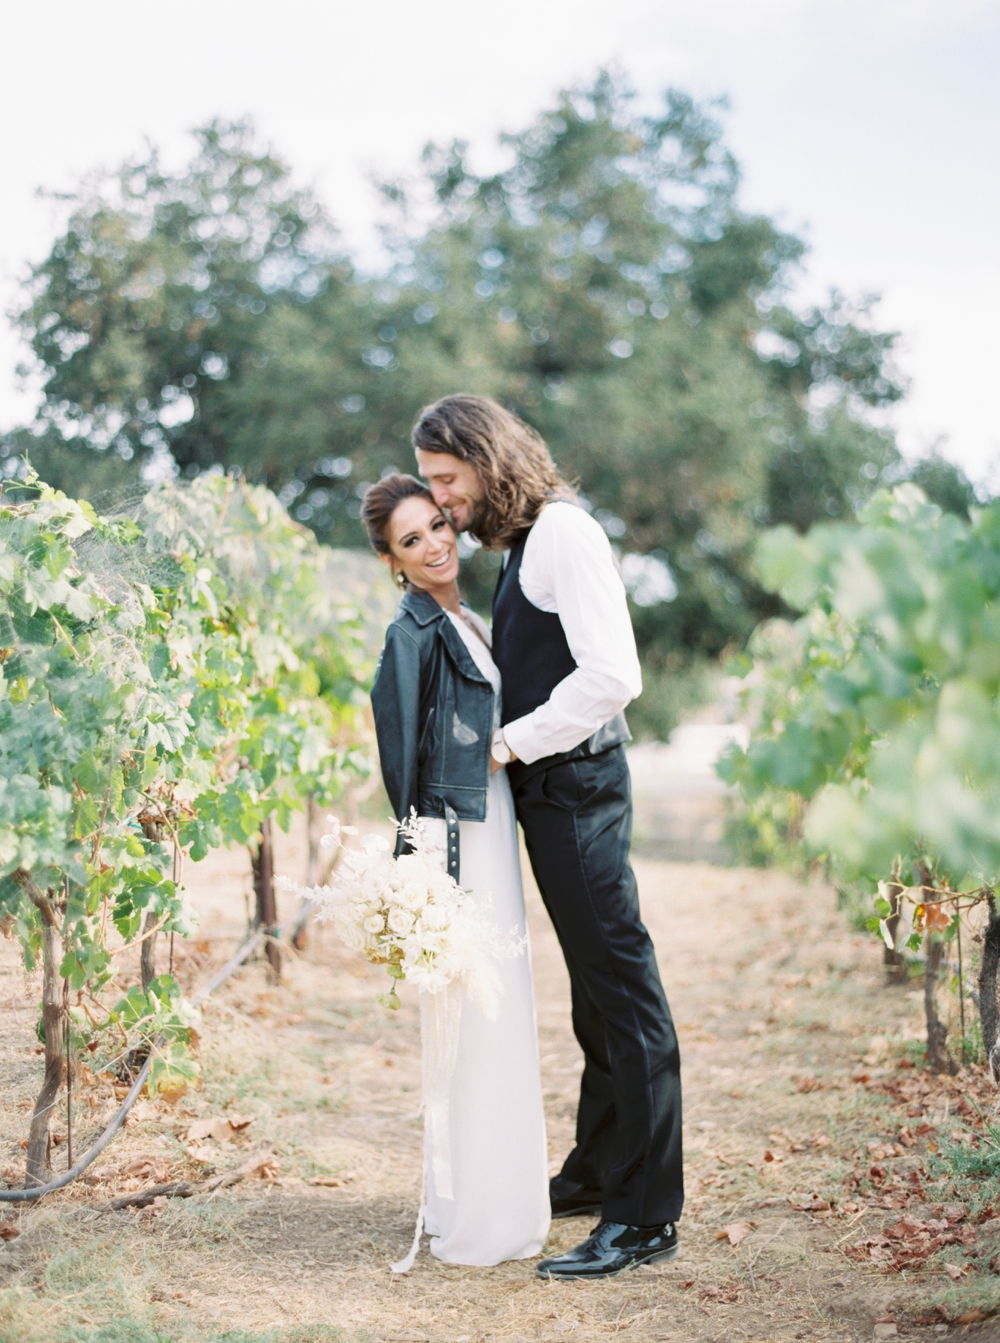 Giracci Vineyards Wedding Editorial - Orange County Photographer